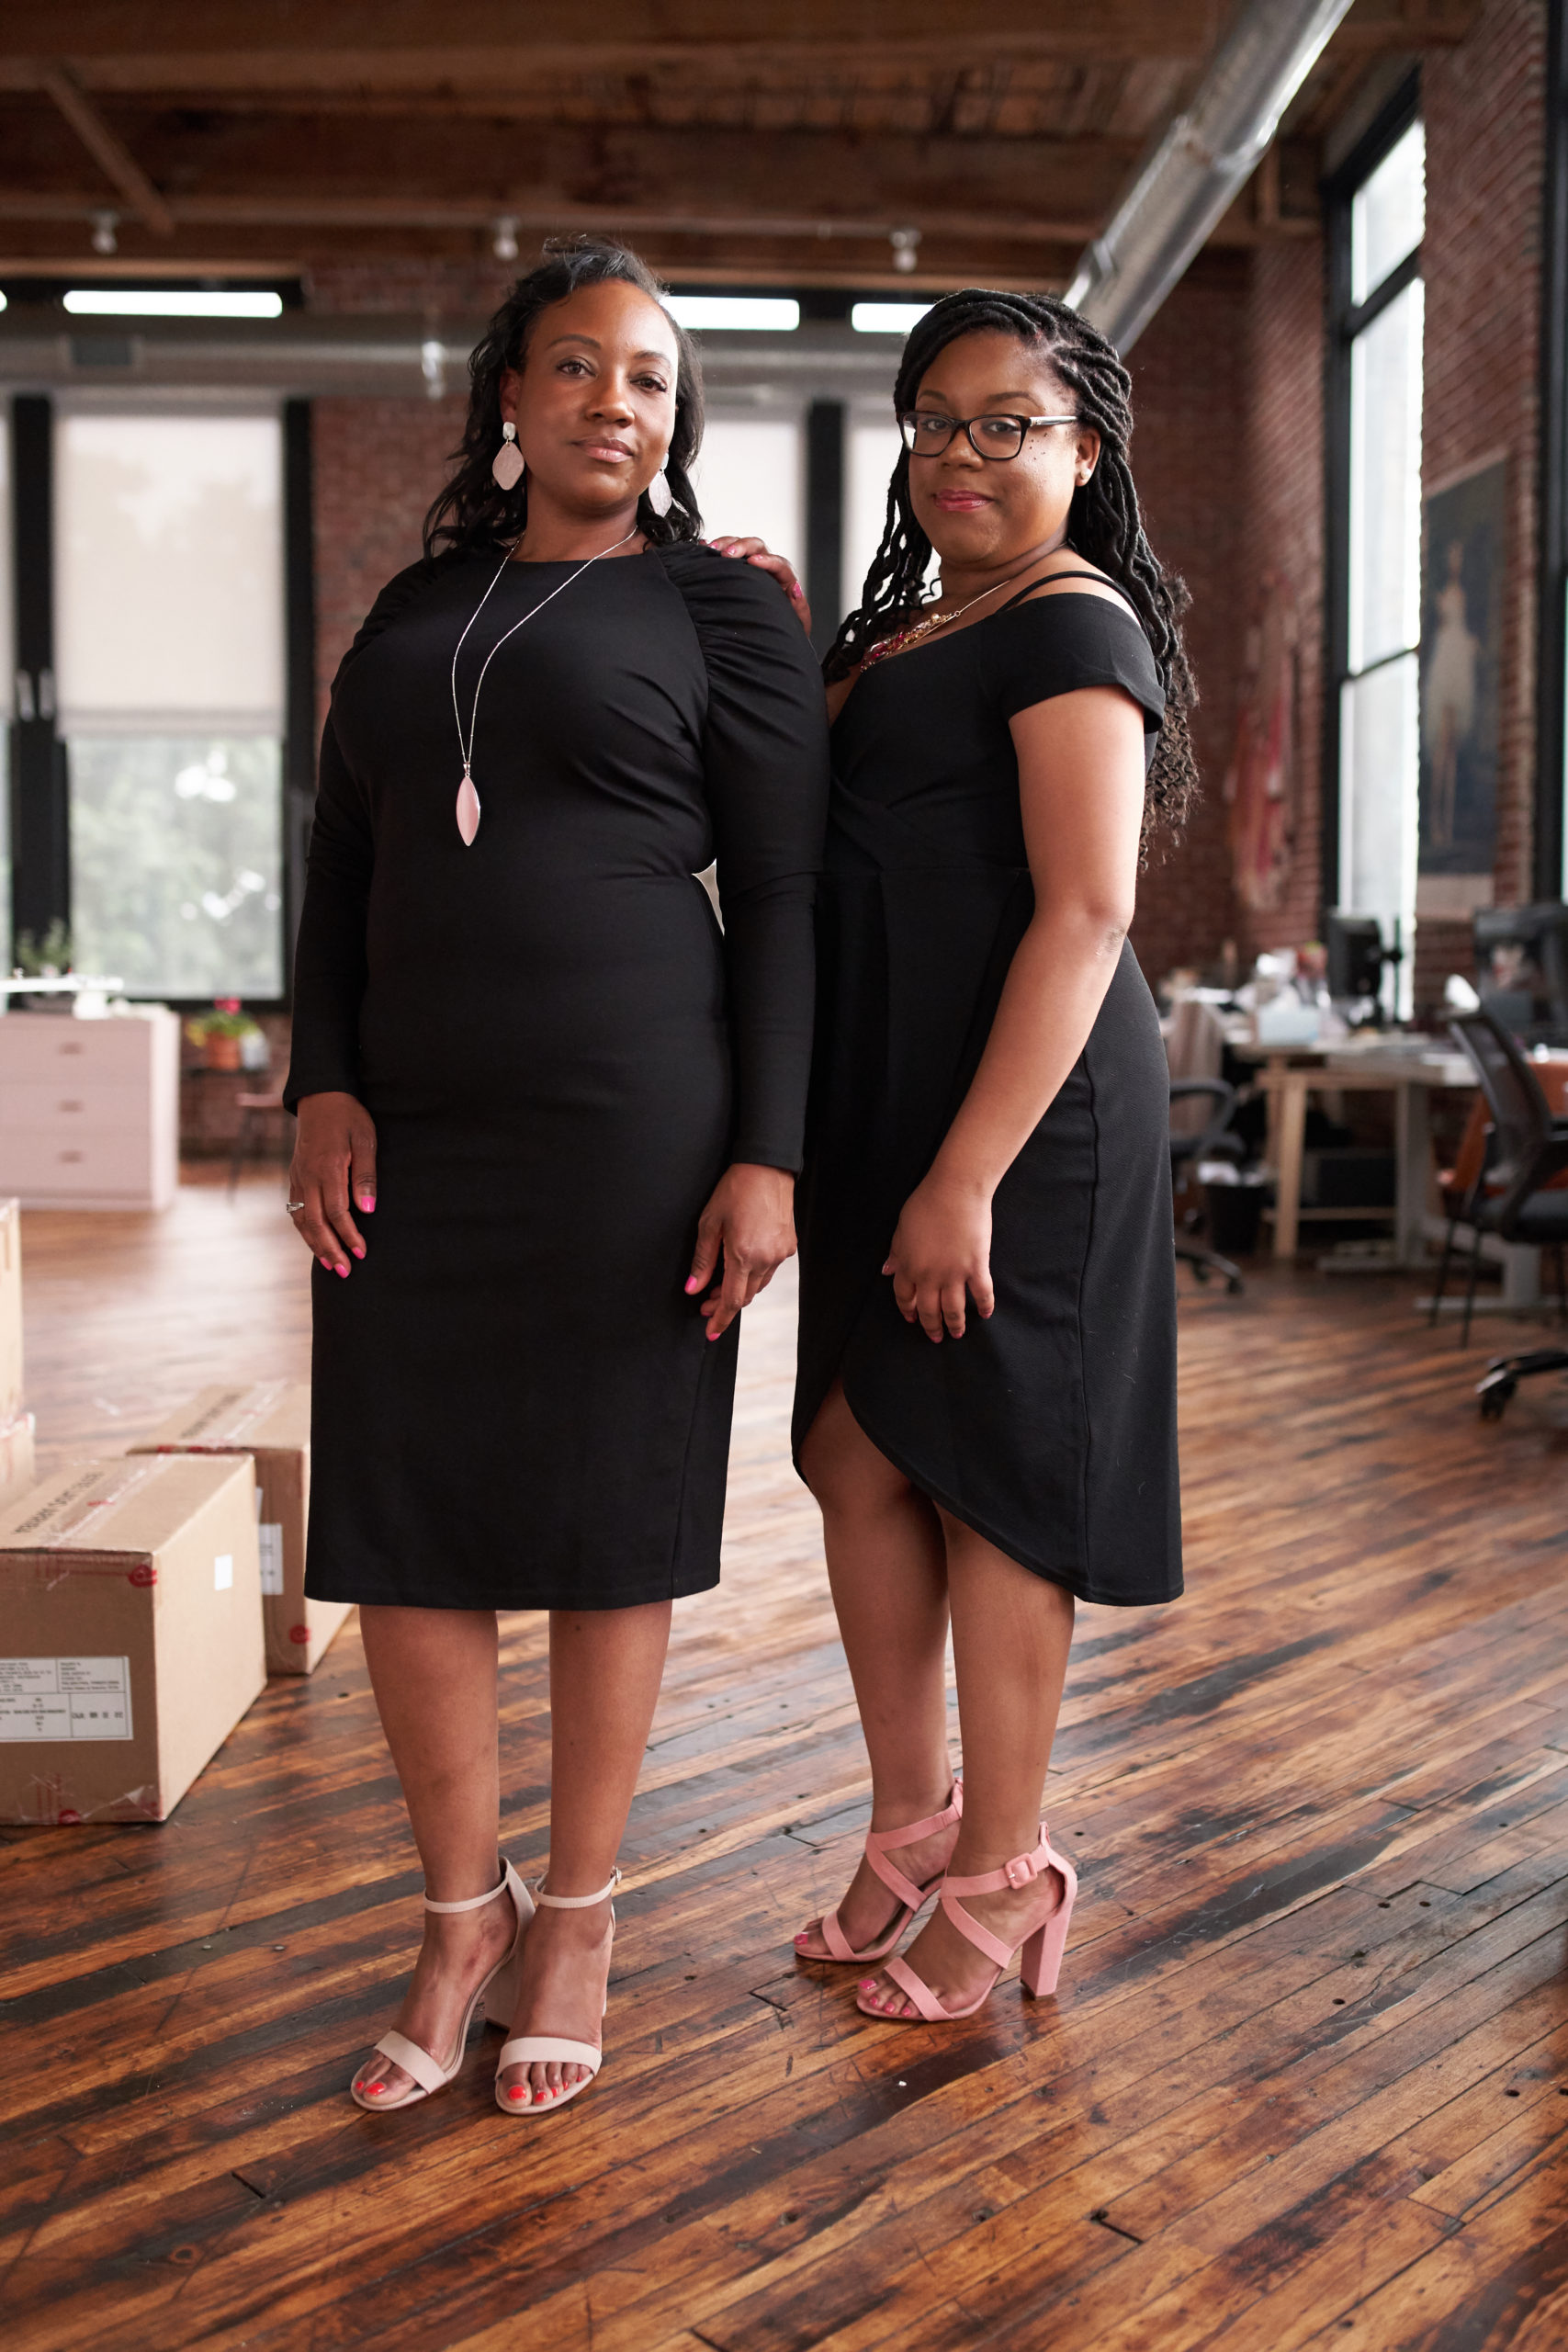 FTBOU Founders women of color Representation Matters